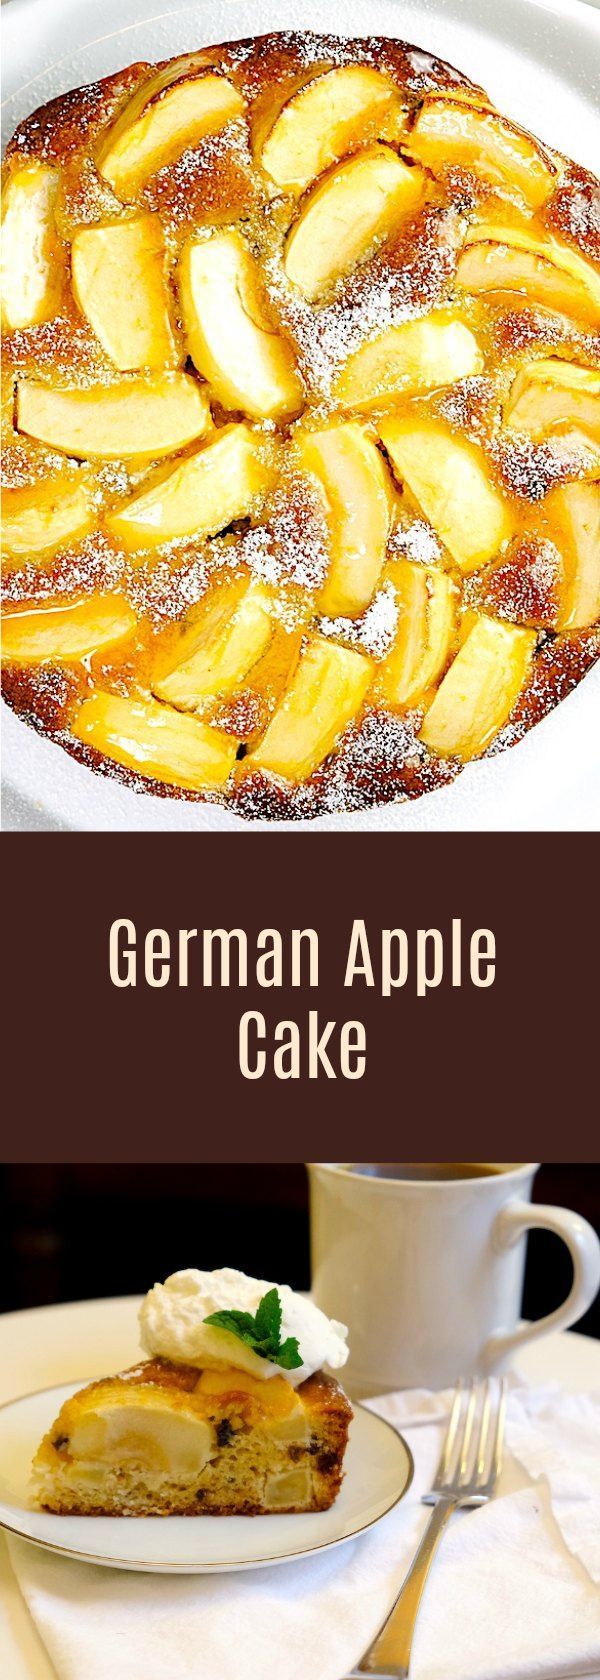 German Apple Cake, Apfelkuchen -   22 german holiday Food ideas